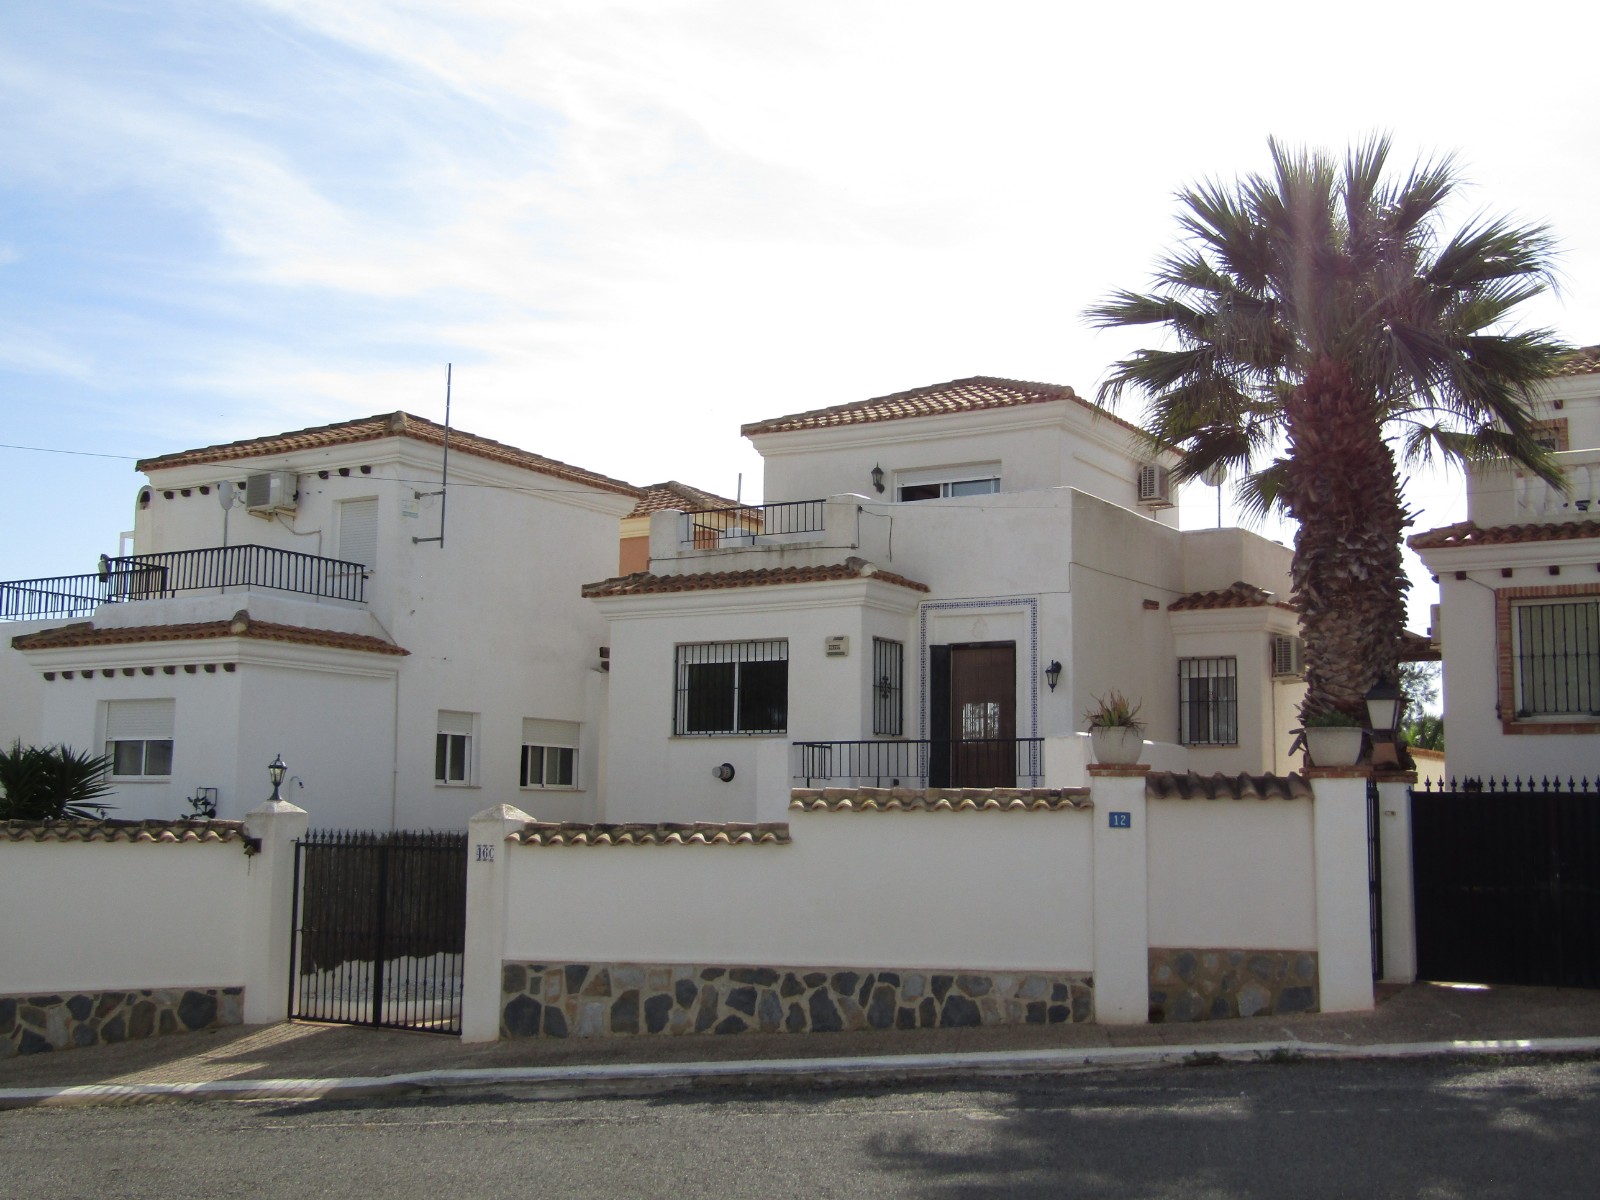 For sale: 2 bedroom house / villa in Orihuela Costa